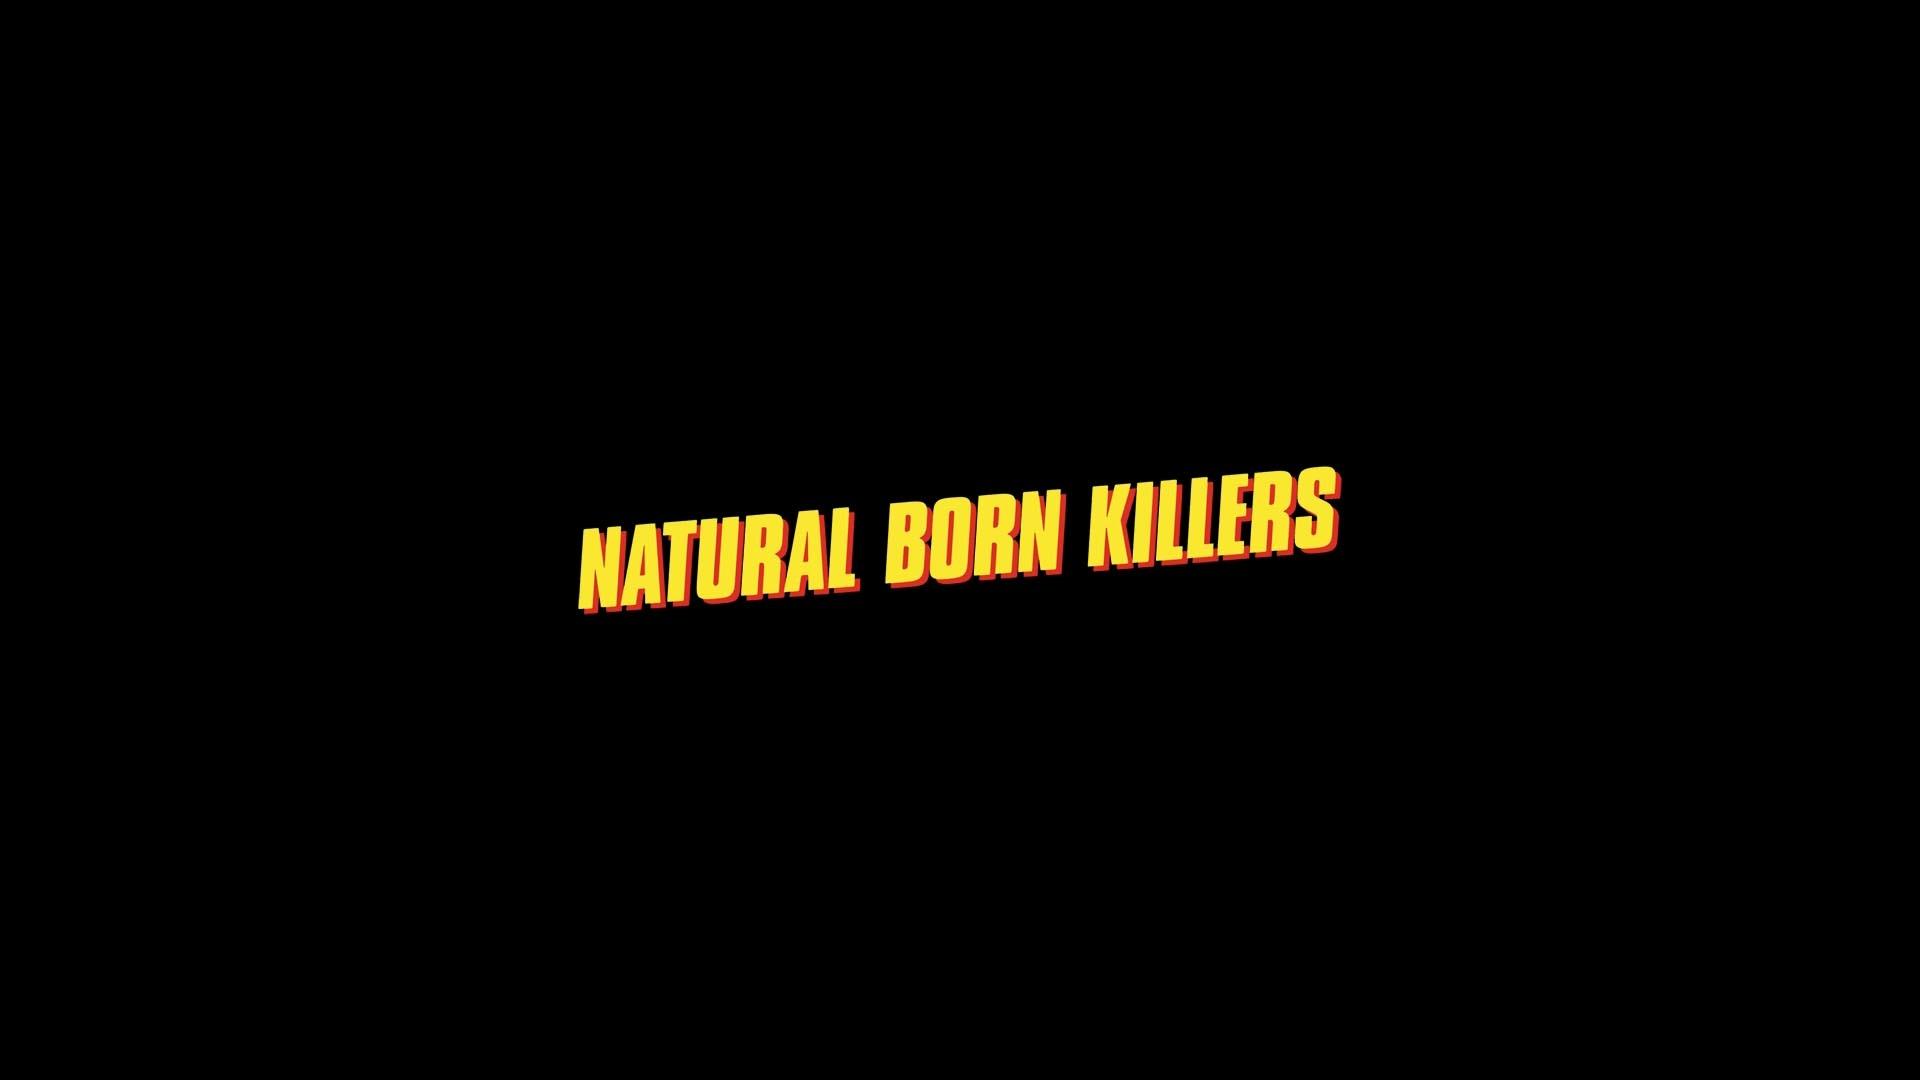 Natural Born Killers at 1024 x 1024 iPad size wallpapers HD quality